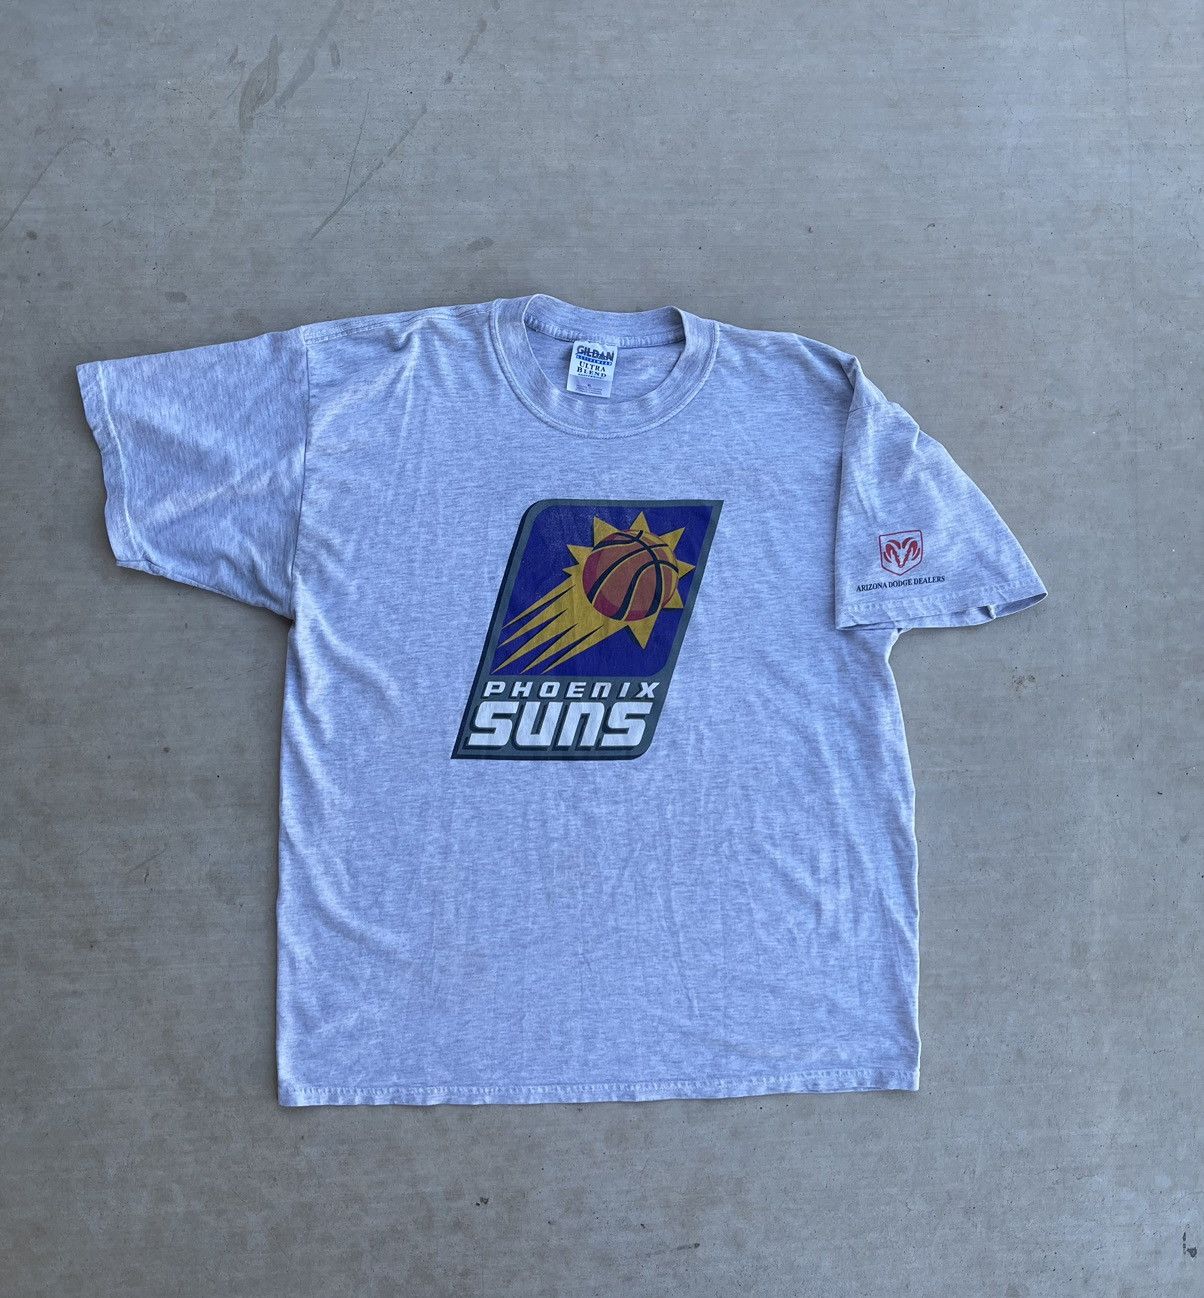 Nike Vintage Early 2000’s Phoenix Suns Basketball T Shirt Size XL Size US XL / EU 56 / 4 - 1 Preview